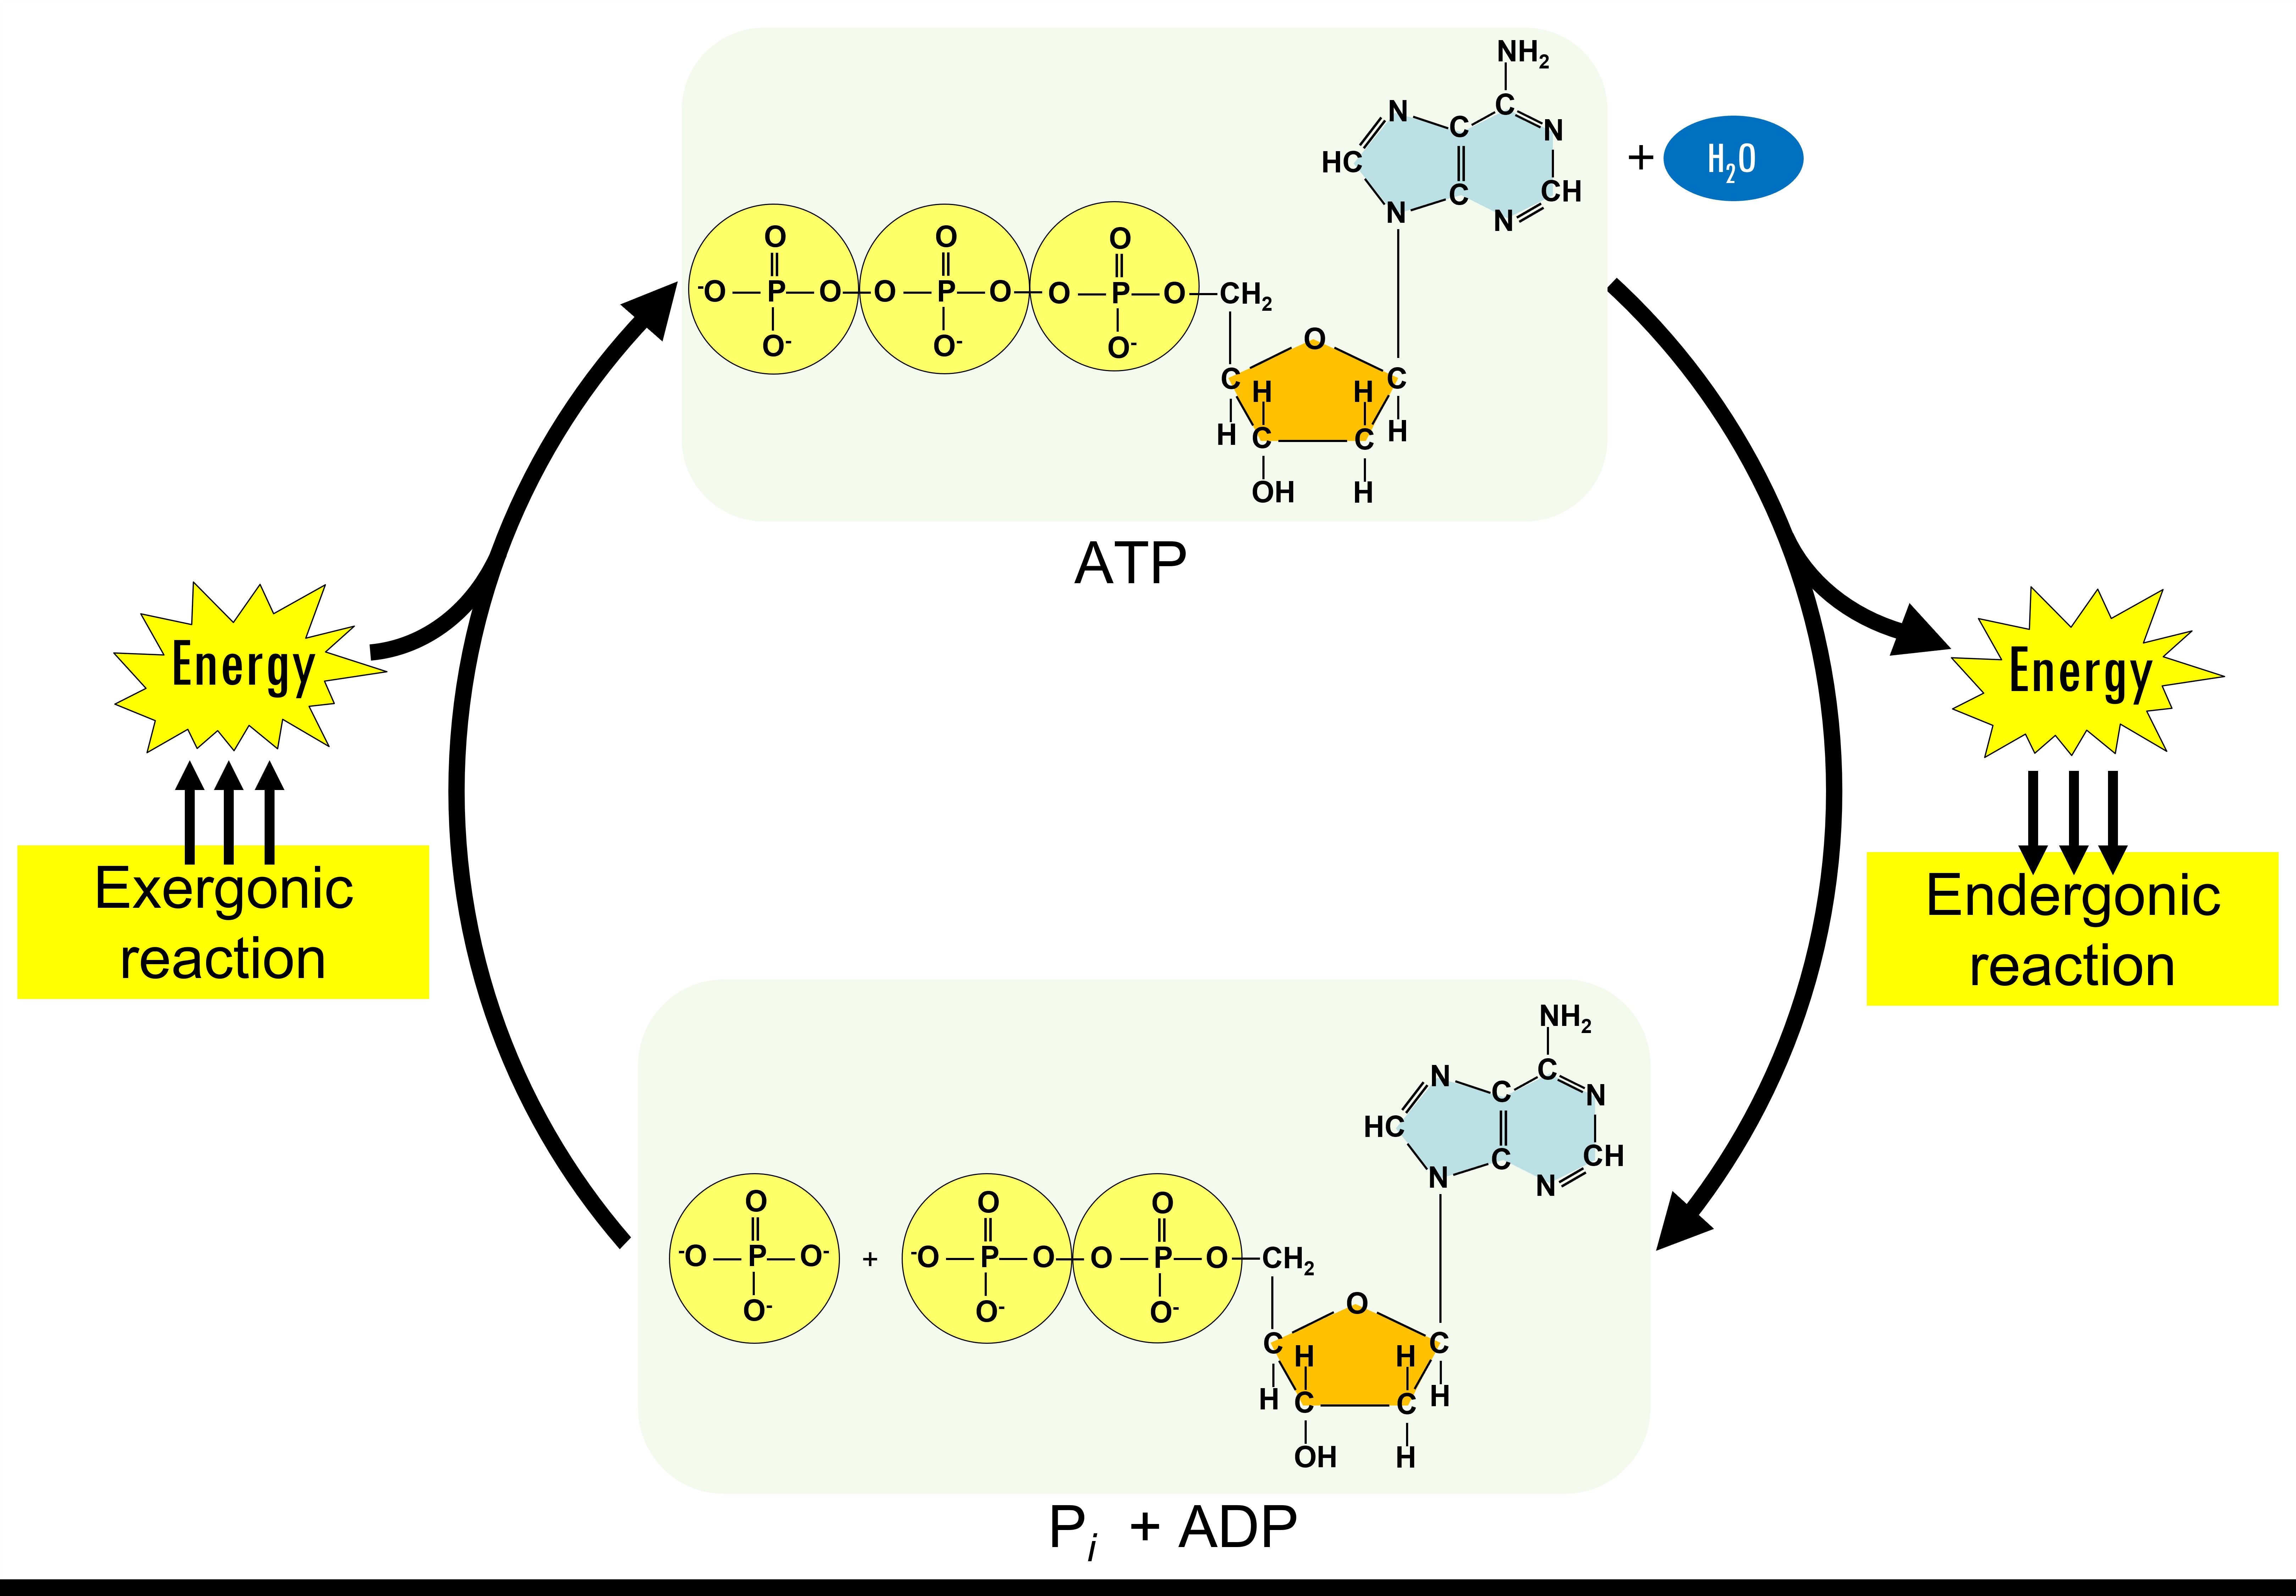 ATP Cycle